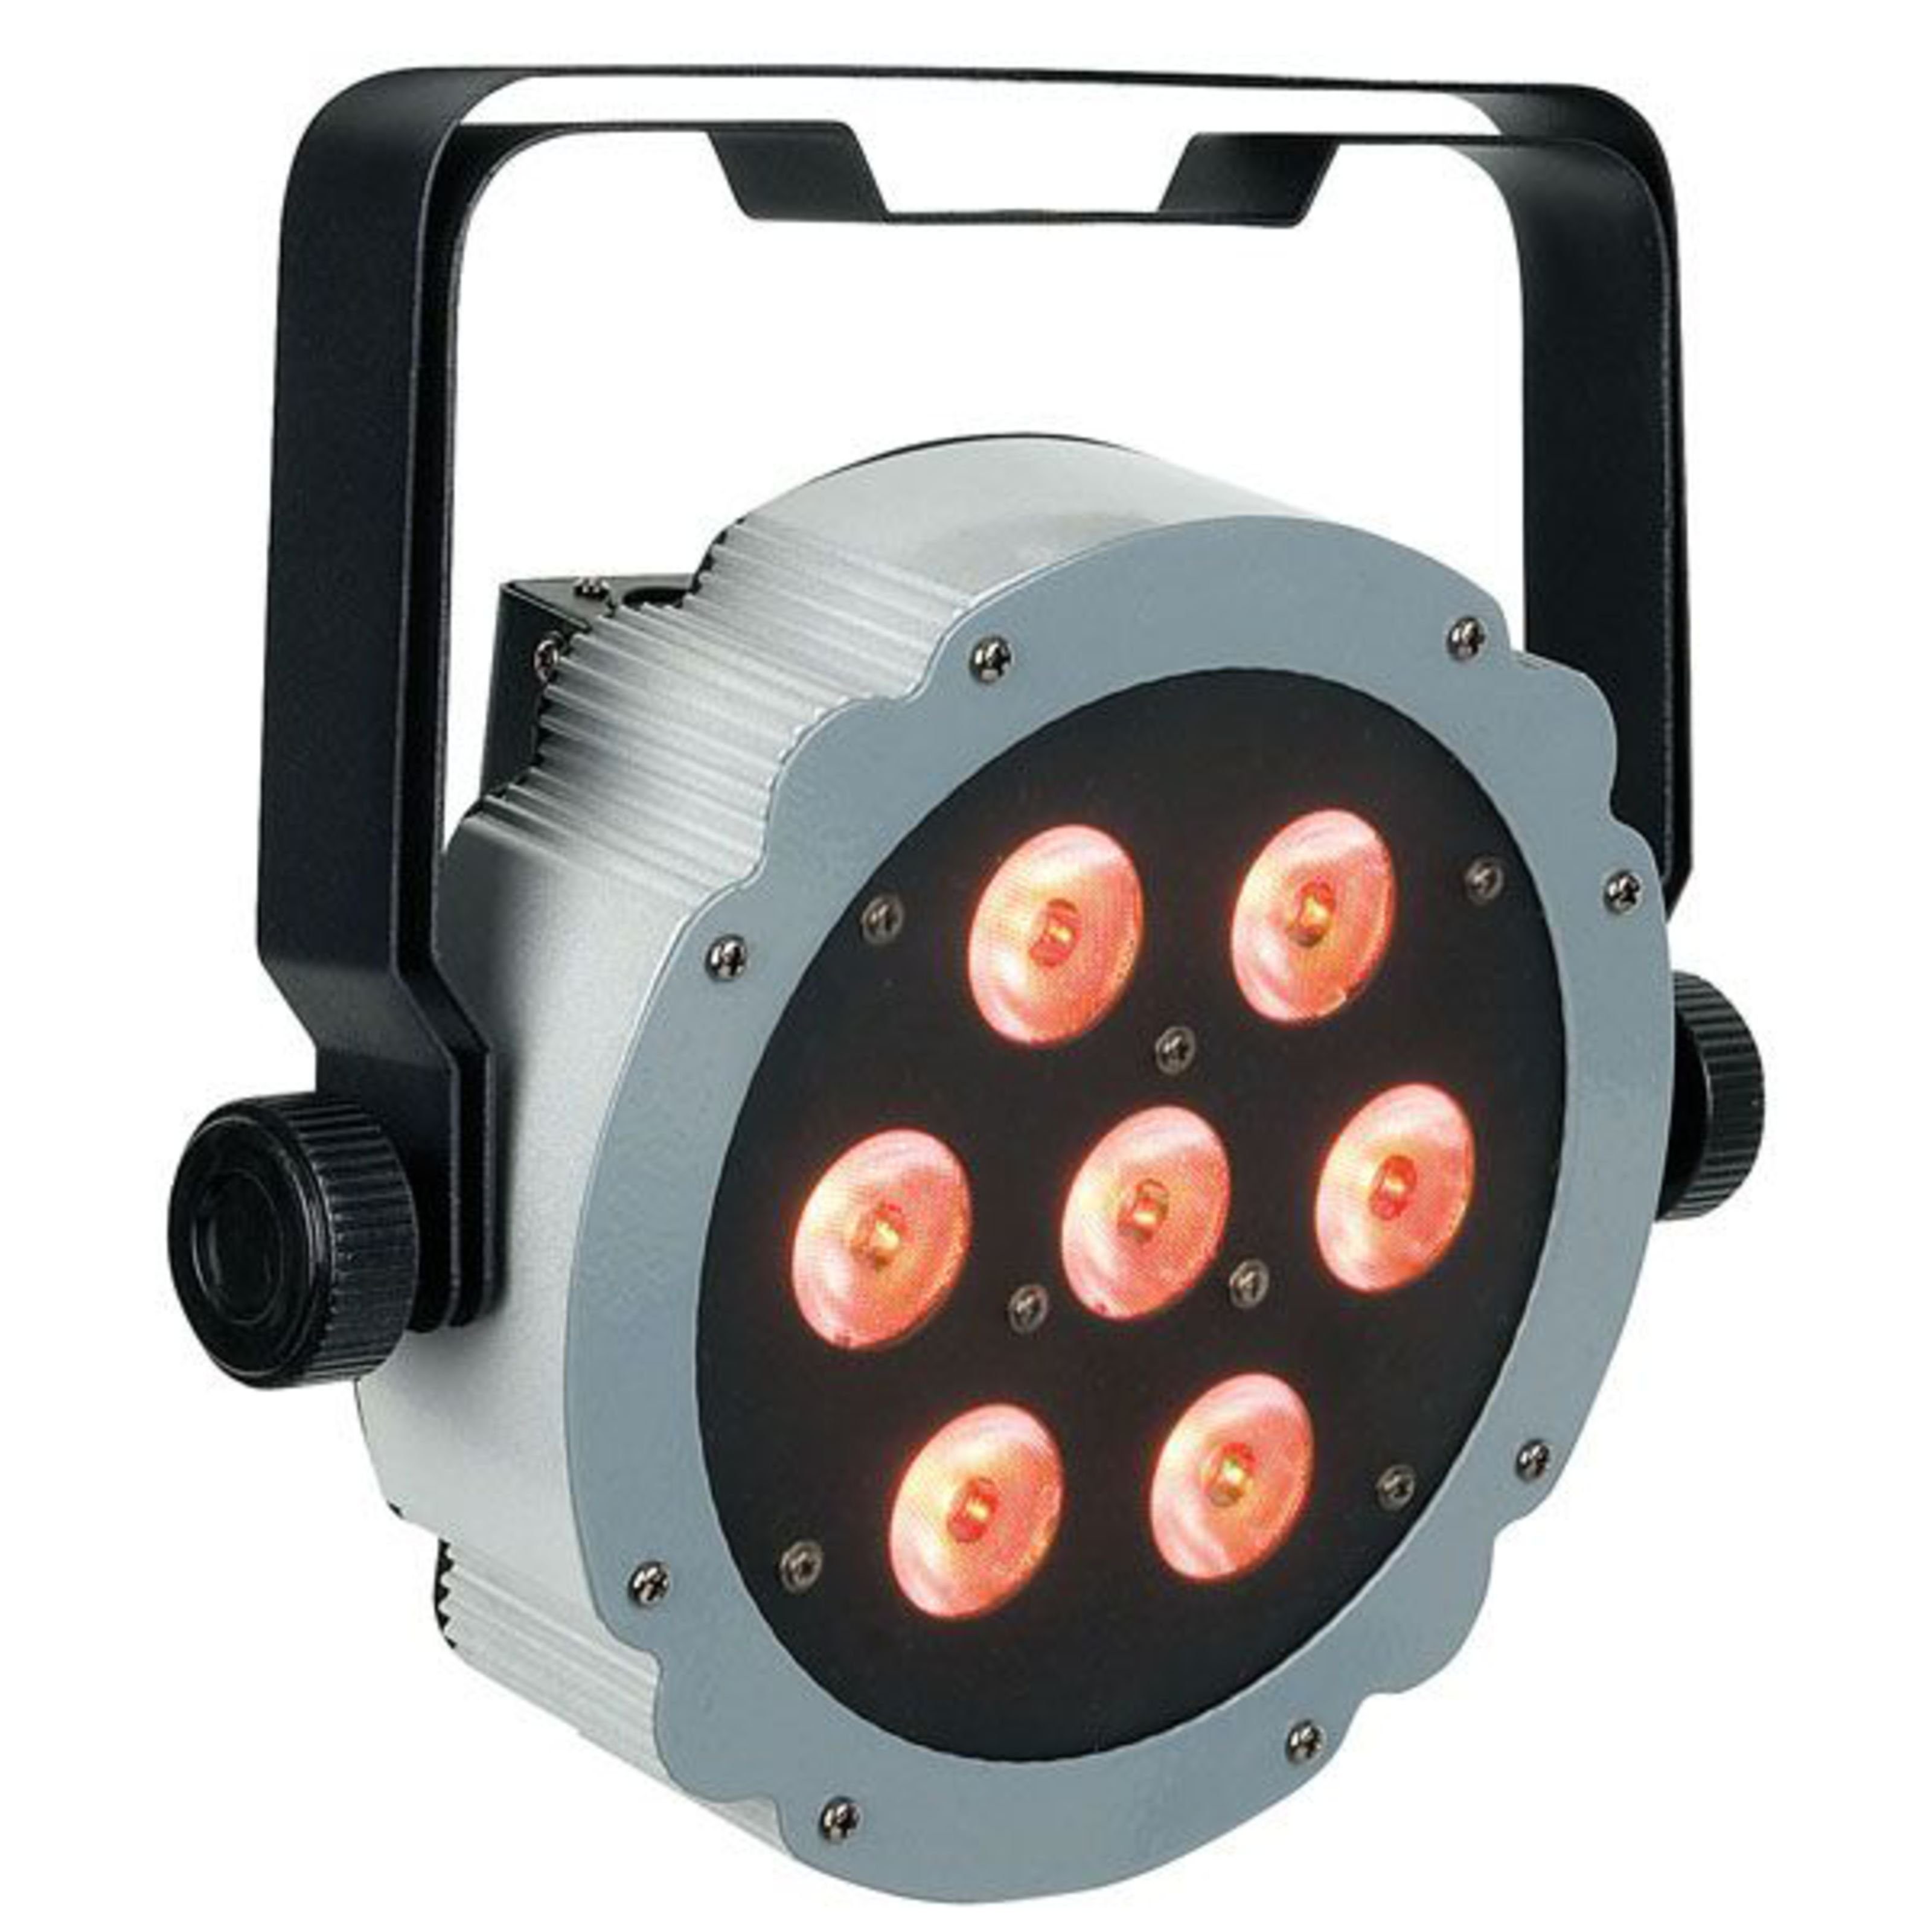 Show tec LED Scheinwerfer, Compact Par 7 Tri - LED PAR Scheinwerfer